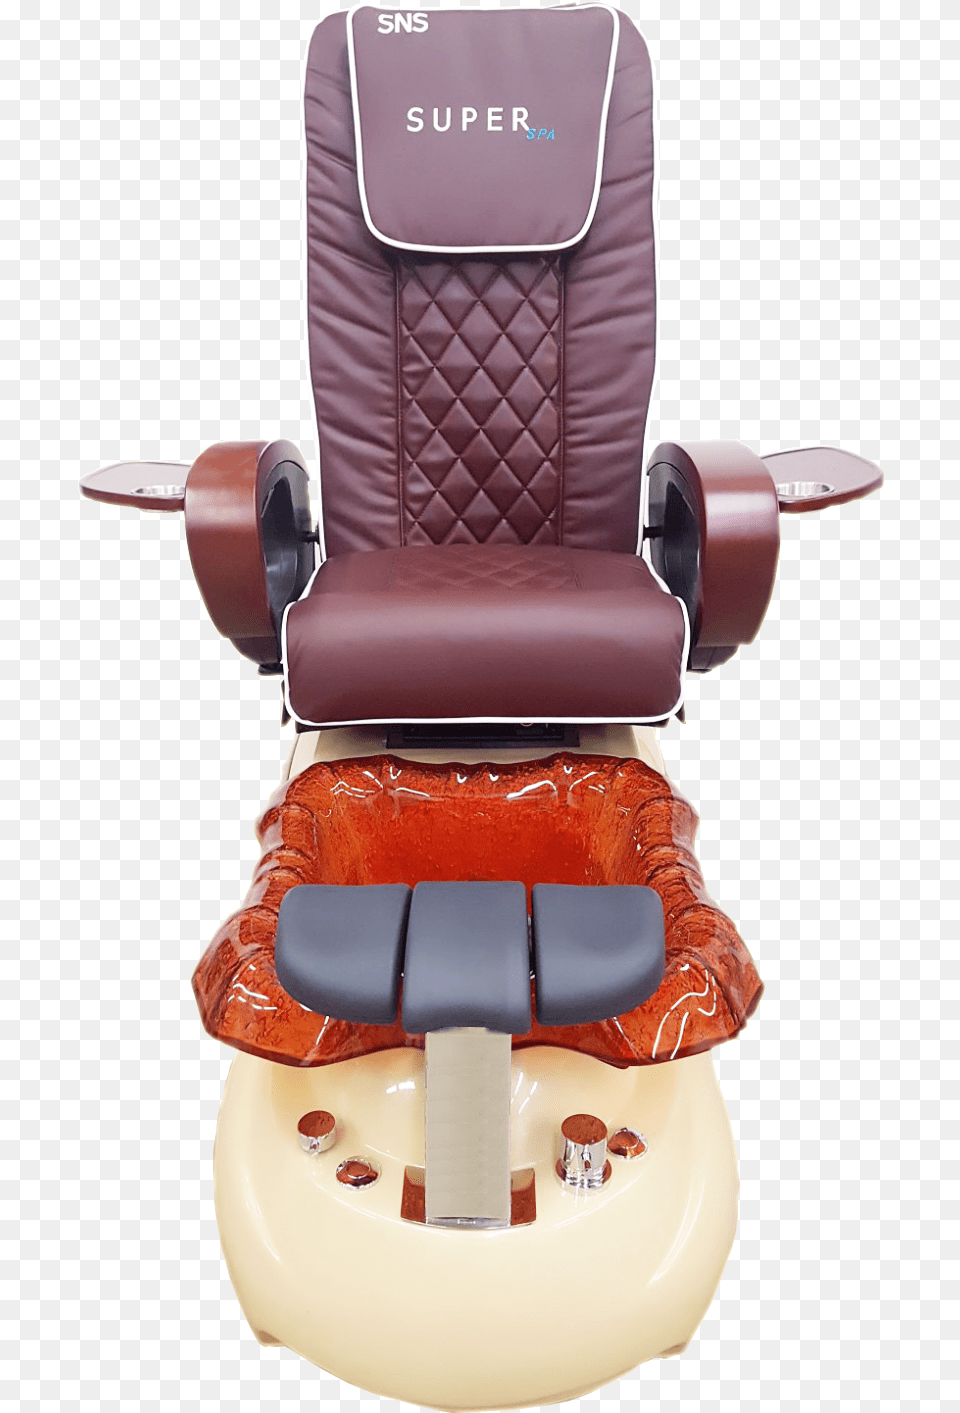 Sns S980 Pedicure Spa, Furniture, Chair, Cushion, Home Decor Free Png